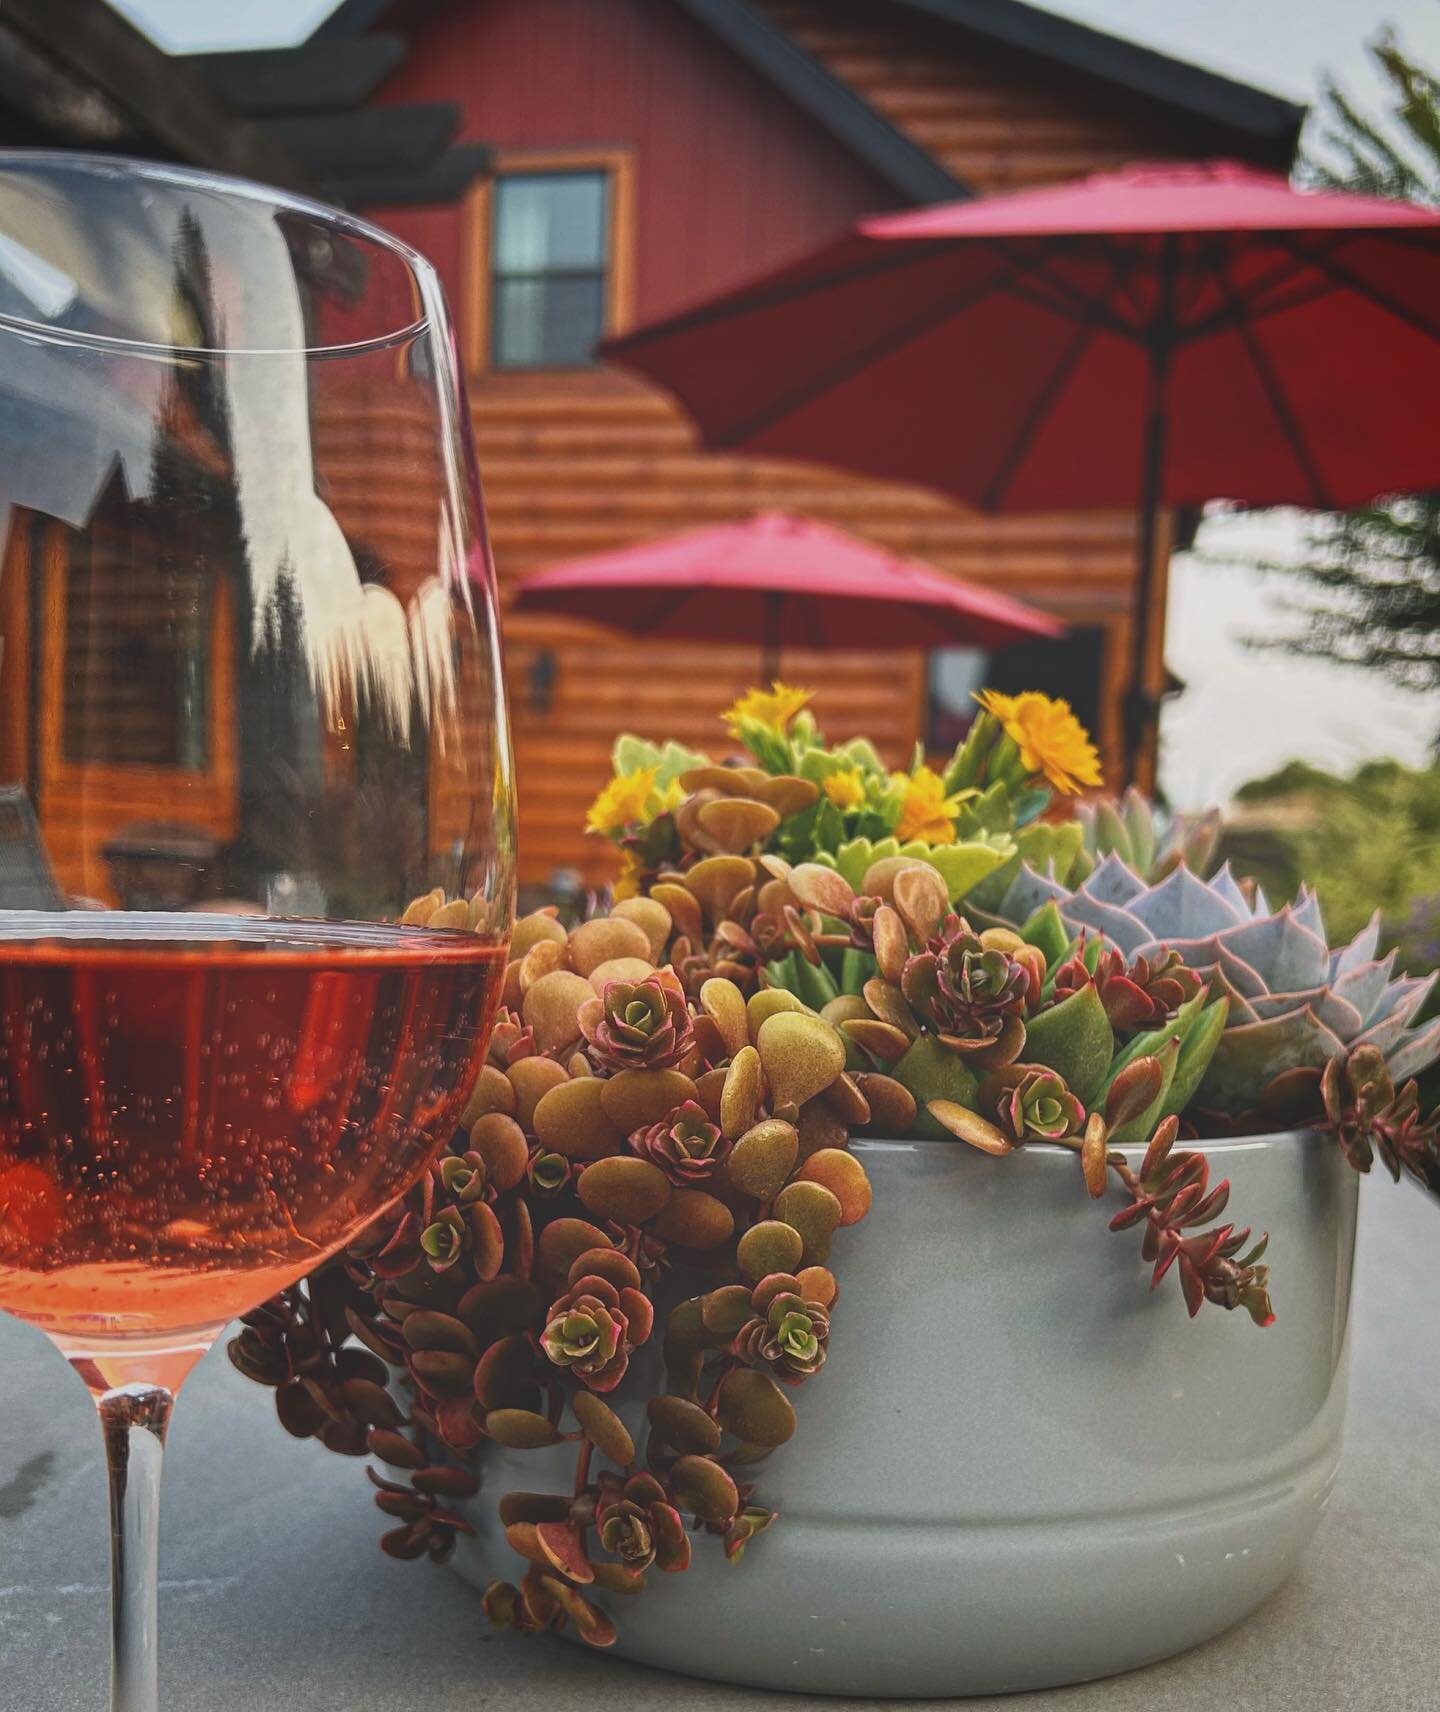 Enjoying some rose on the back patio. 

#franziskahaus #bedandbreakfast #rose #winelover #franziskahausbedandbreakfast #winehospitality #traveloregon #winecountryliving